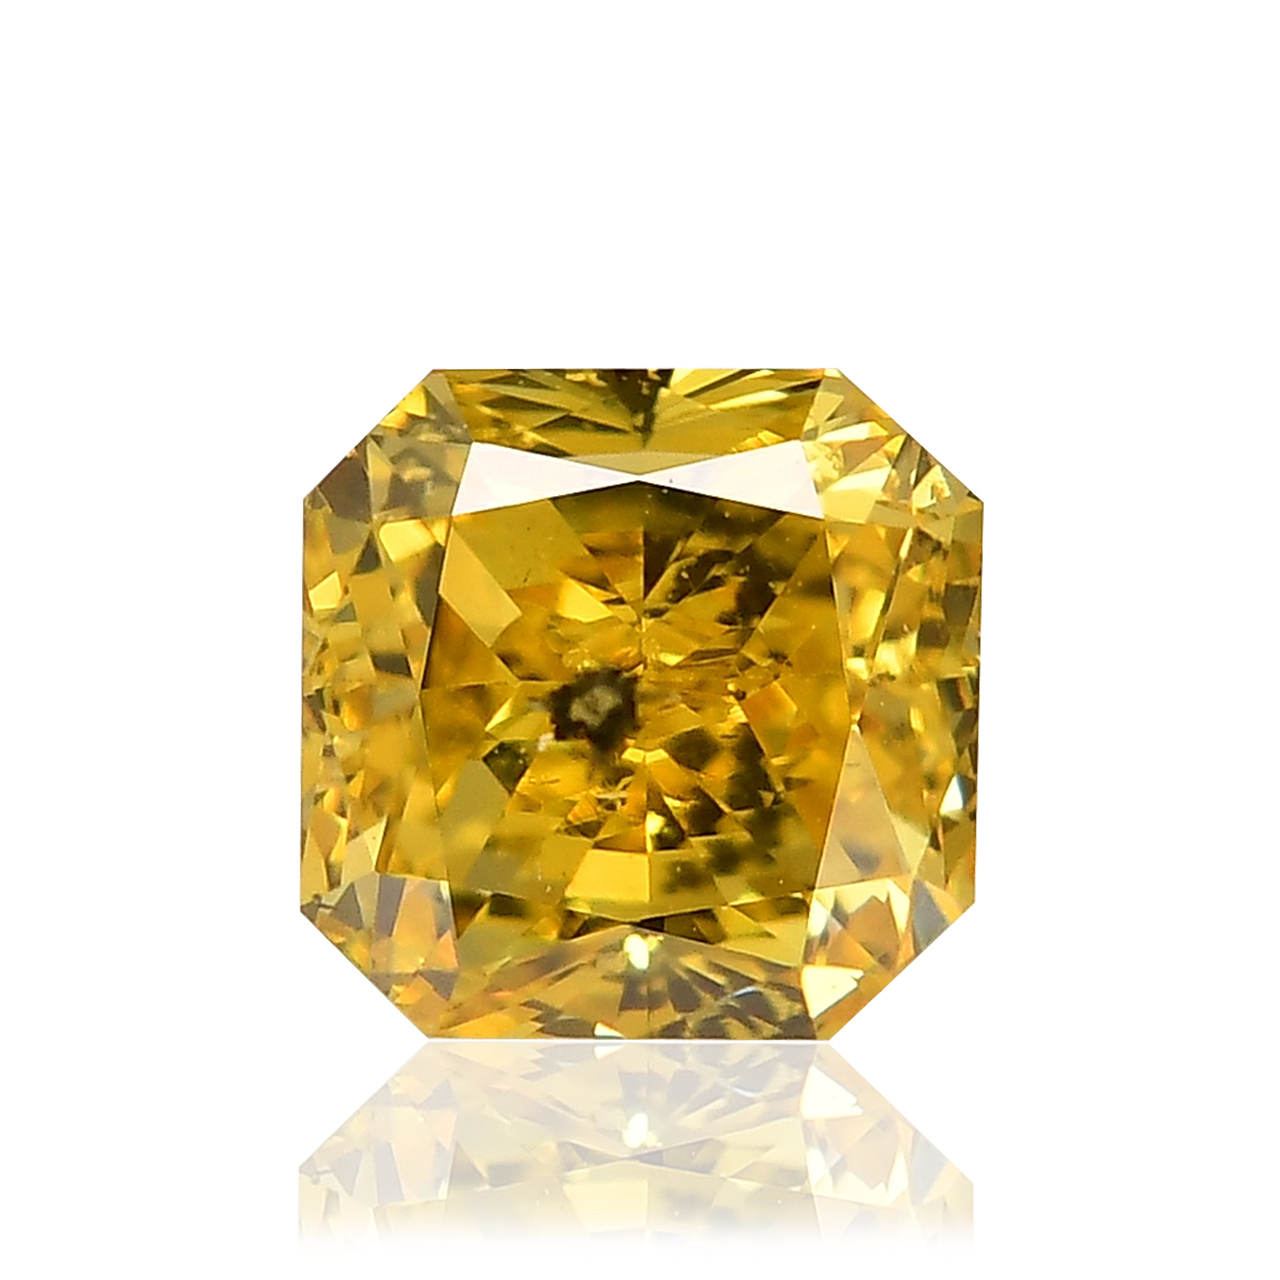 0.71 carat, Fancy Vivid Yellow Diamond, Radiant Shape, (I2) Clarity, GIA,  SKU 417983